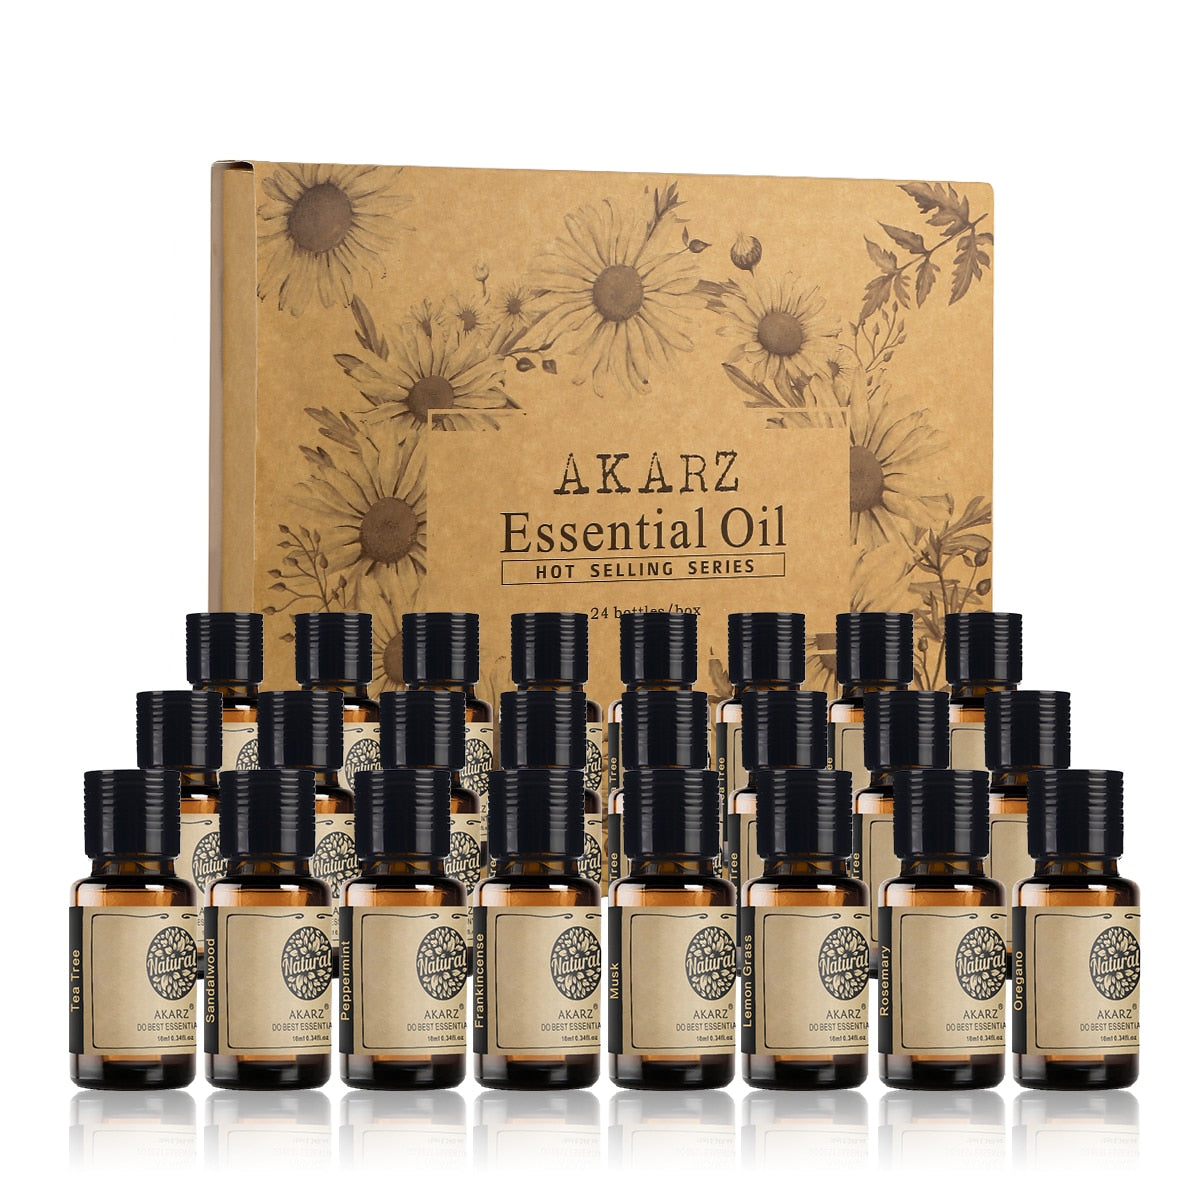 AKARZ Famous brand natural aromatherapy lemon verbena essential